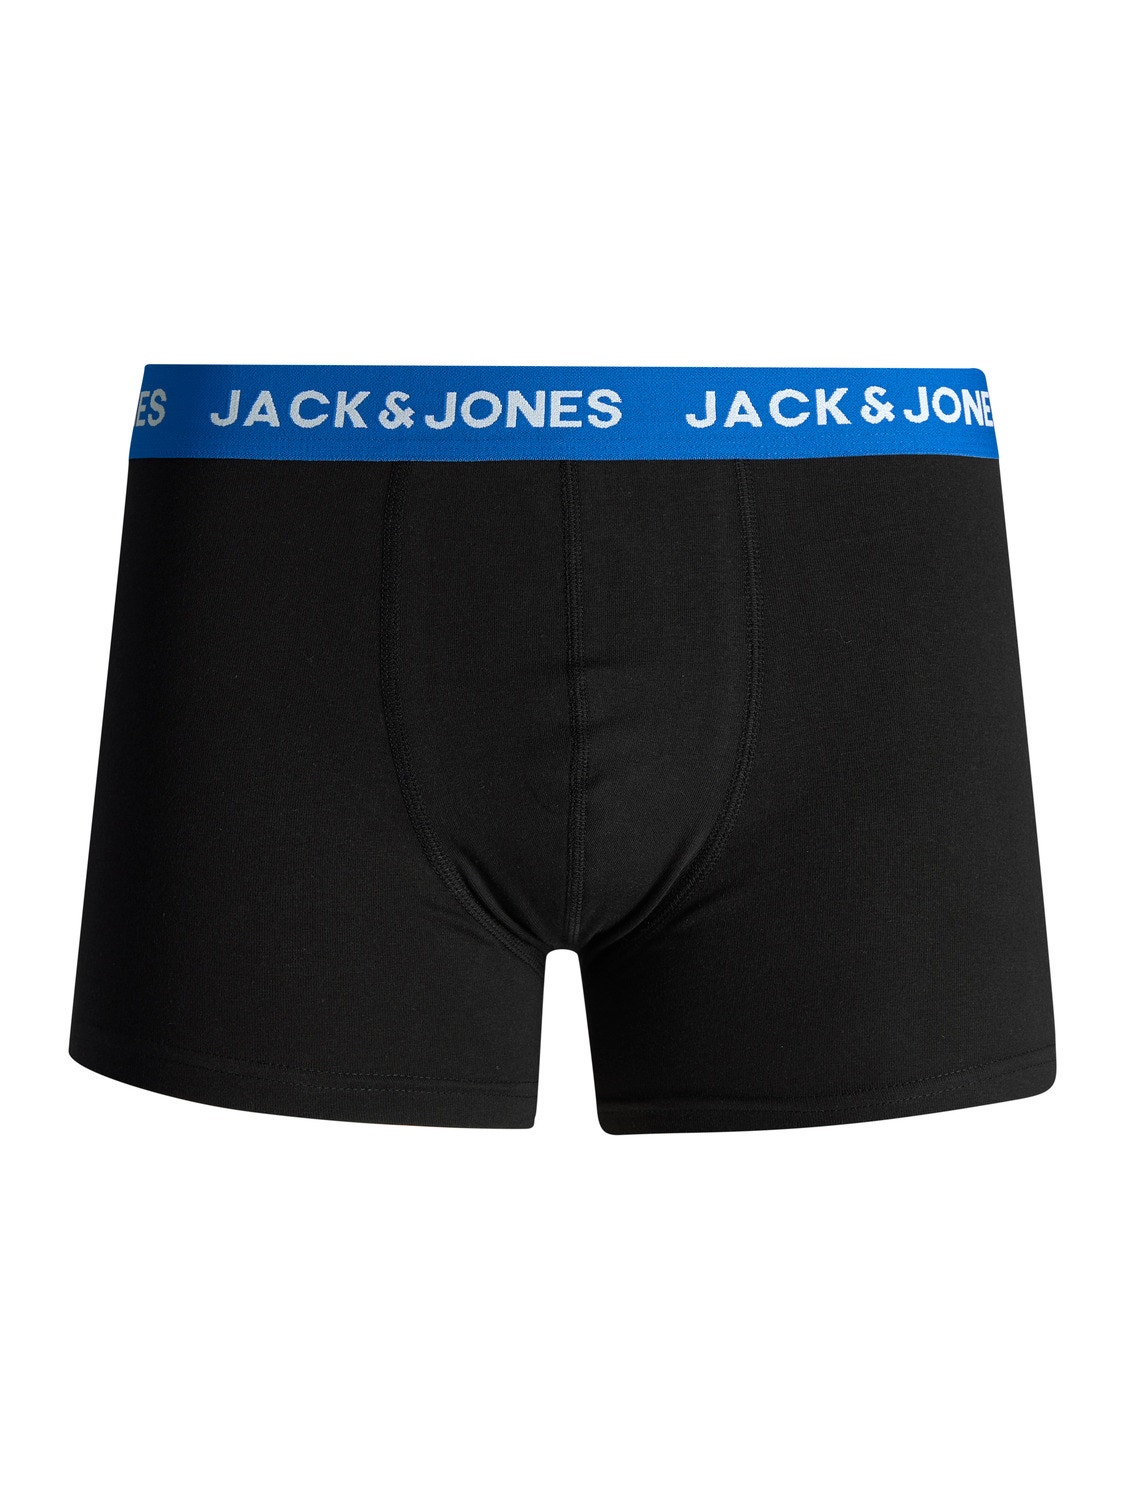 Jack & Jones 5 Trunks -Electric Blue Lemonde - 12142342